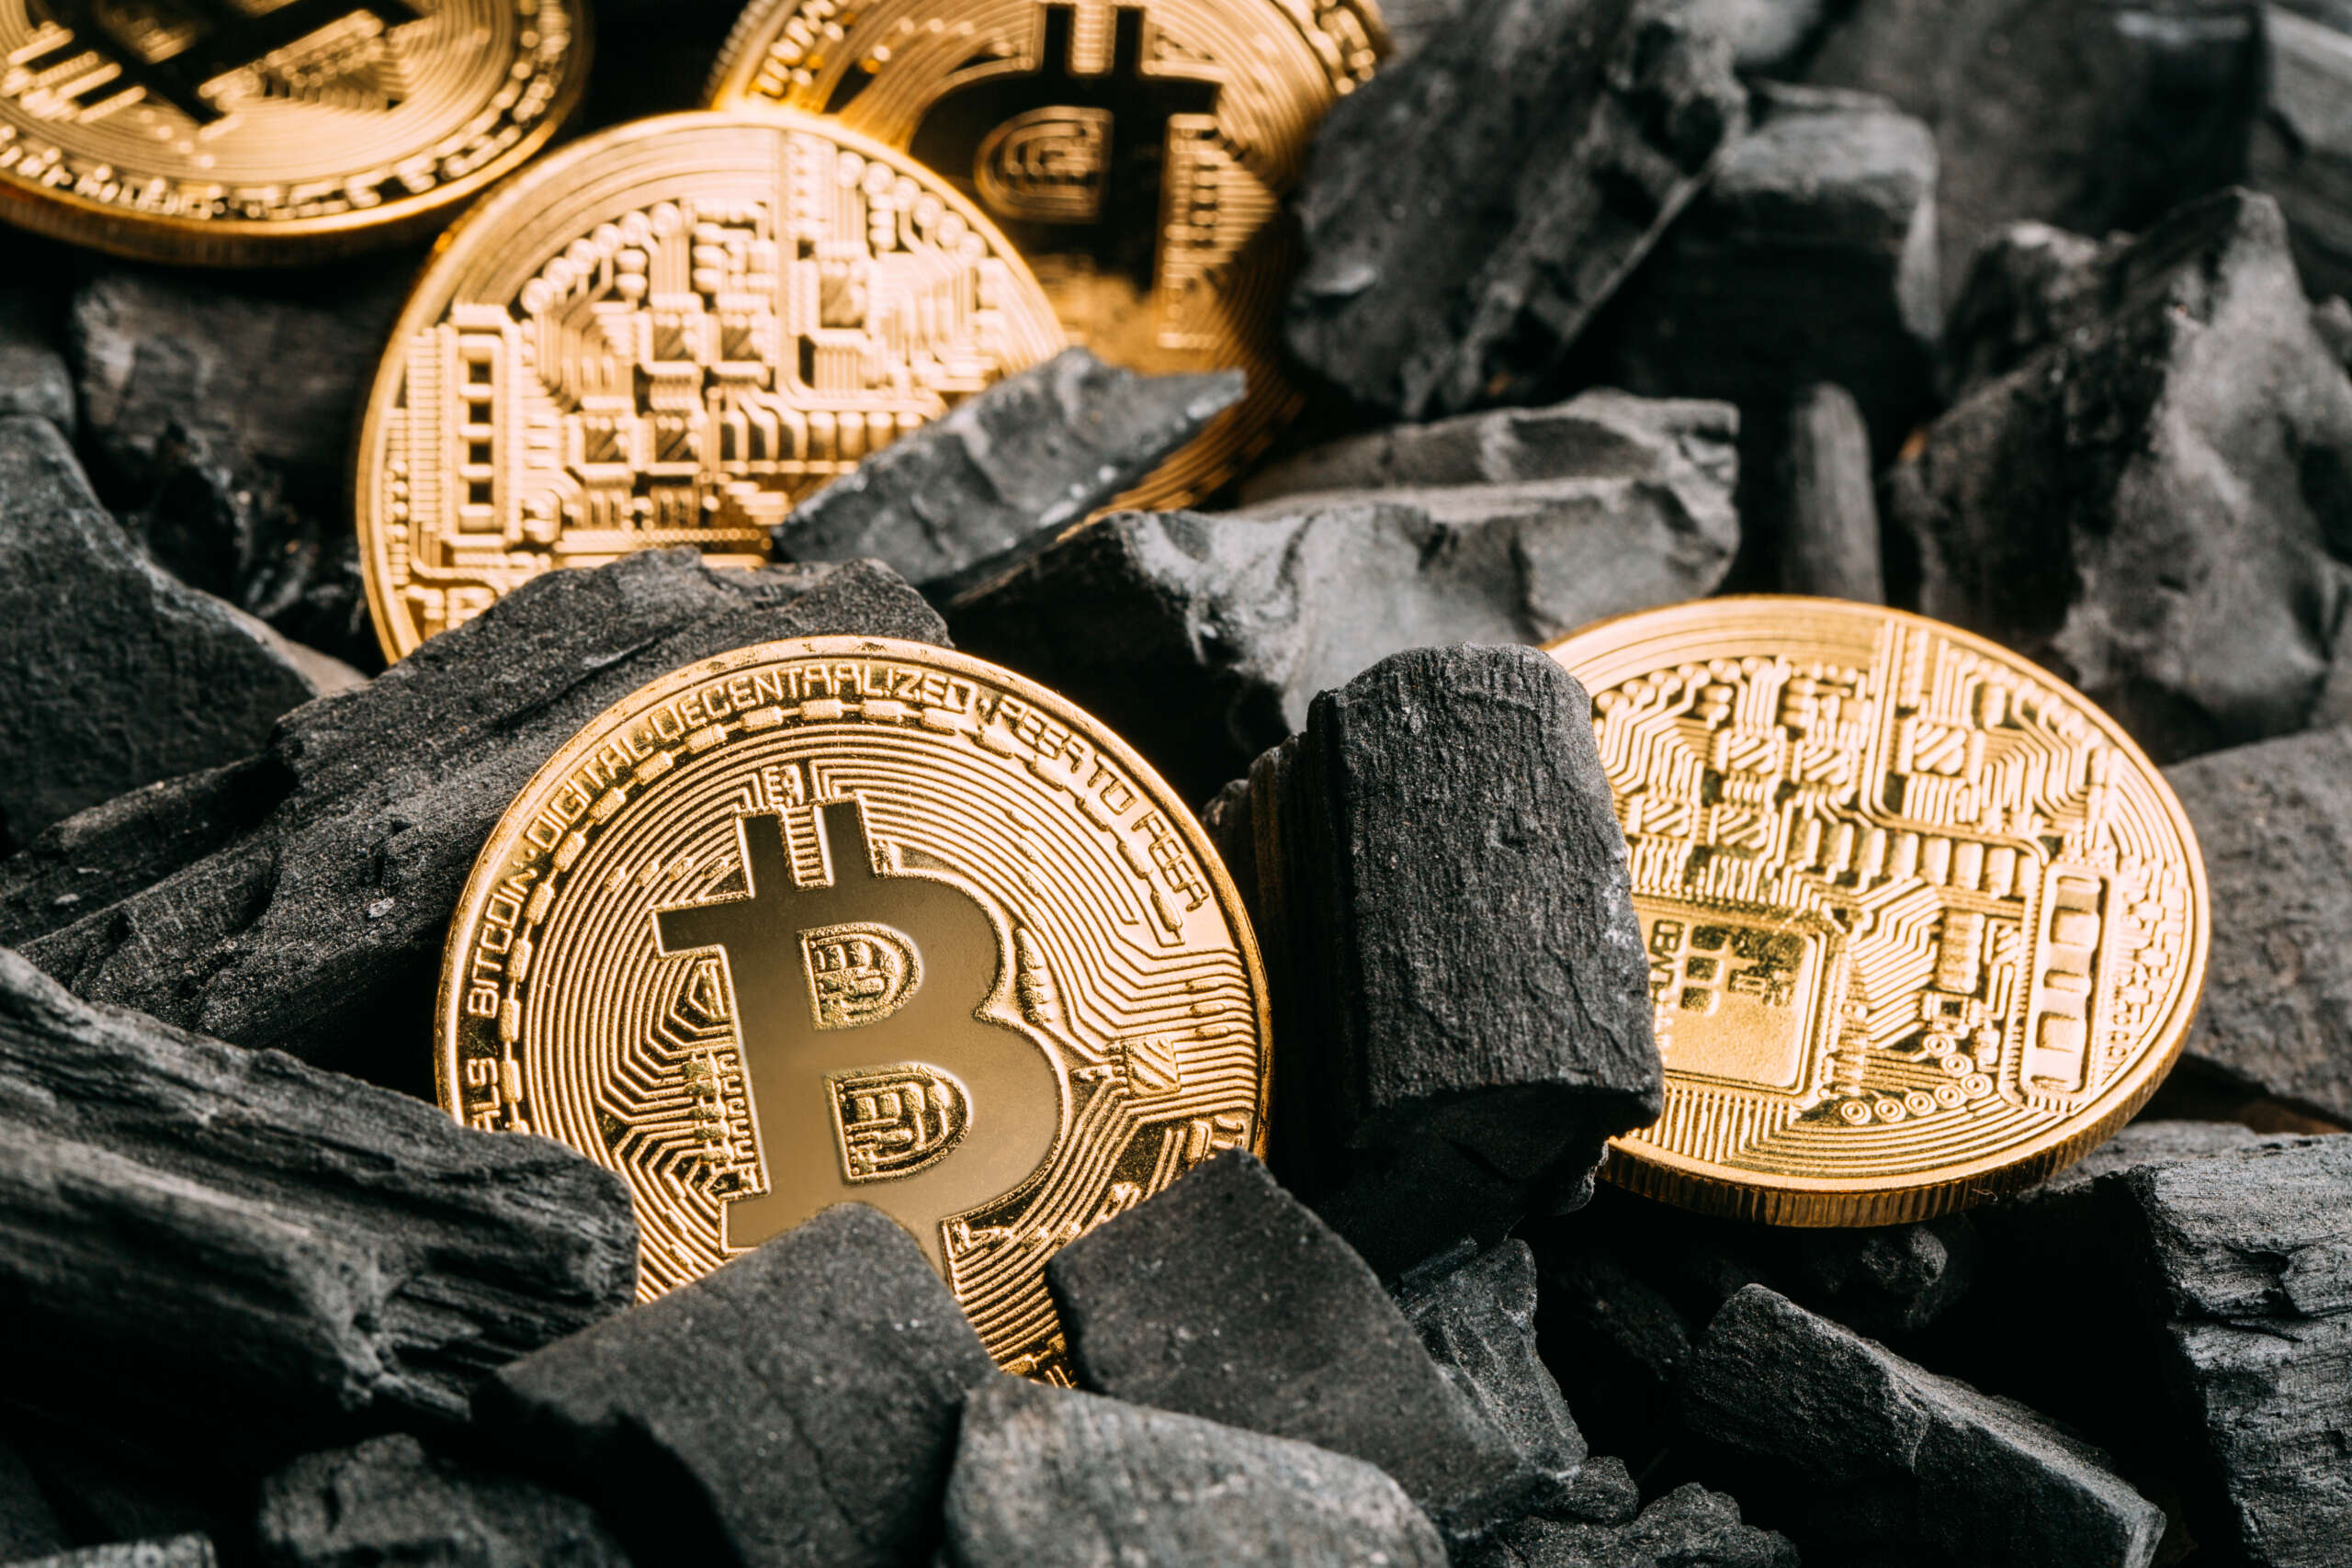 bitcoins-on-coal-background-2022-03-04-06-08-29-utc-scaled.jpg